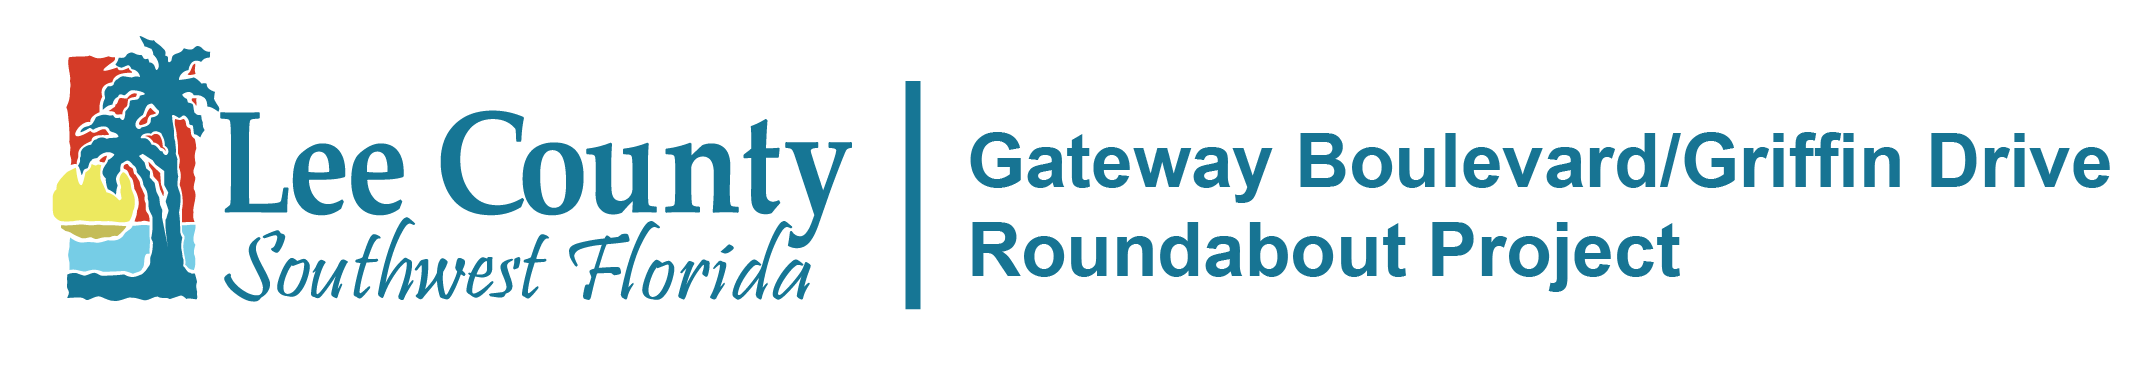 Gateway Boulevard/Griffin Drive Roundabout Project